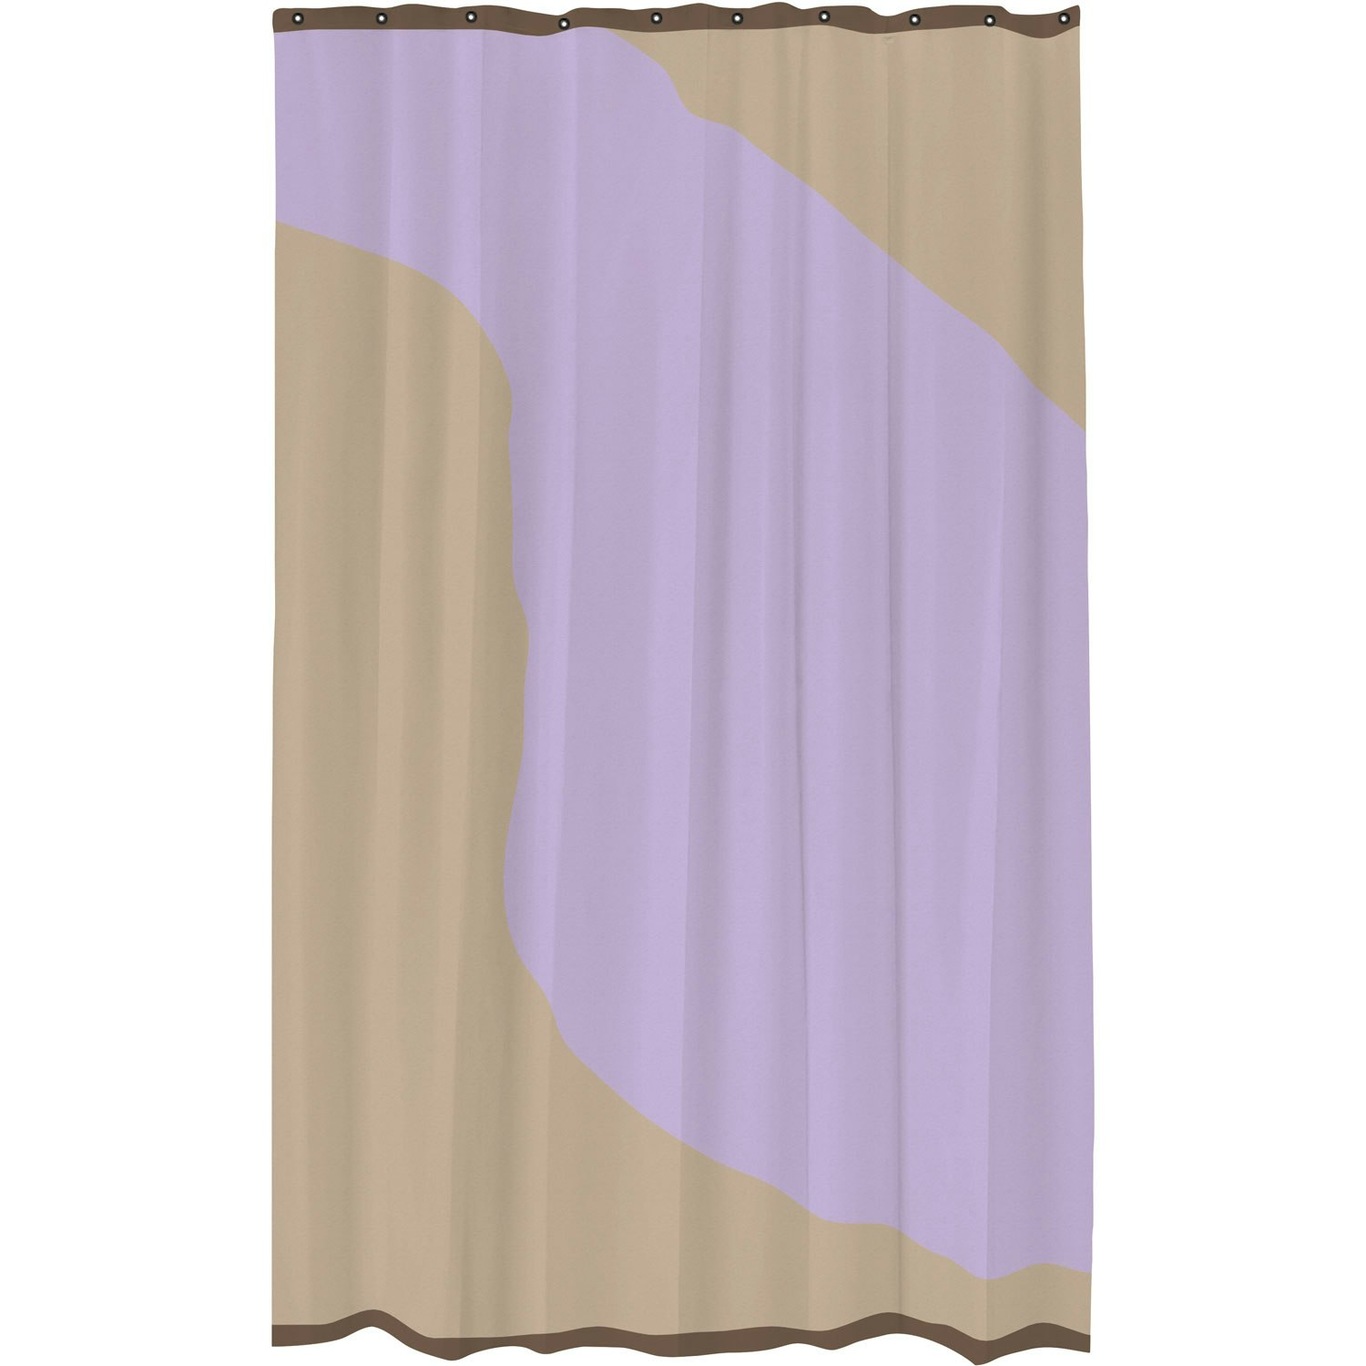 NOVA ARTE Shower Curtain 150x200 cm, Sand / Syreen